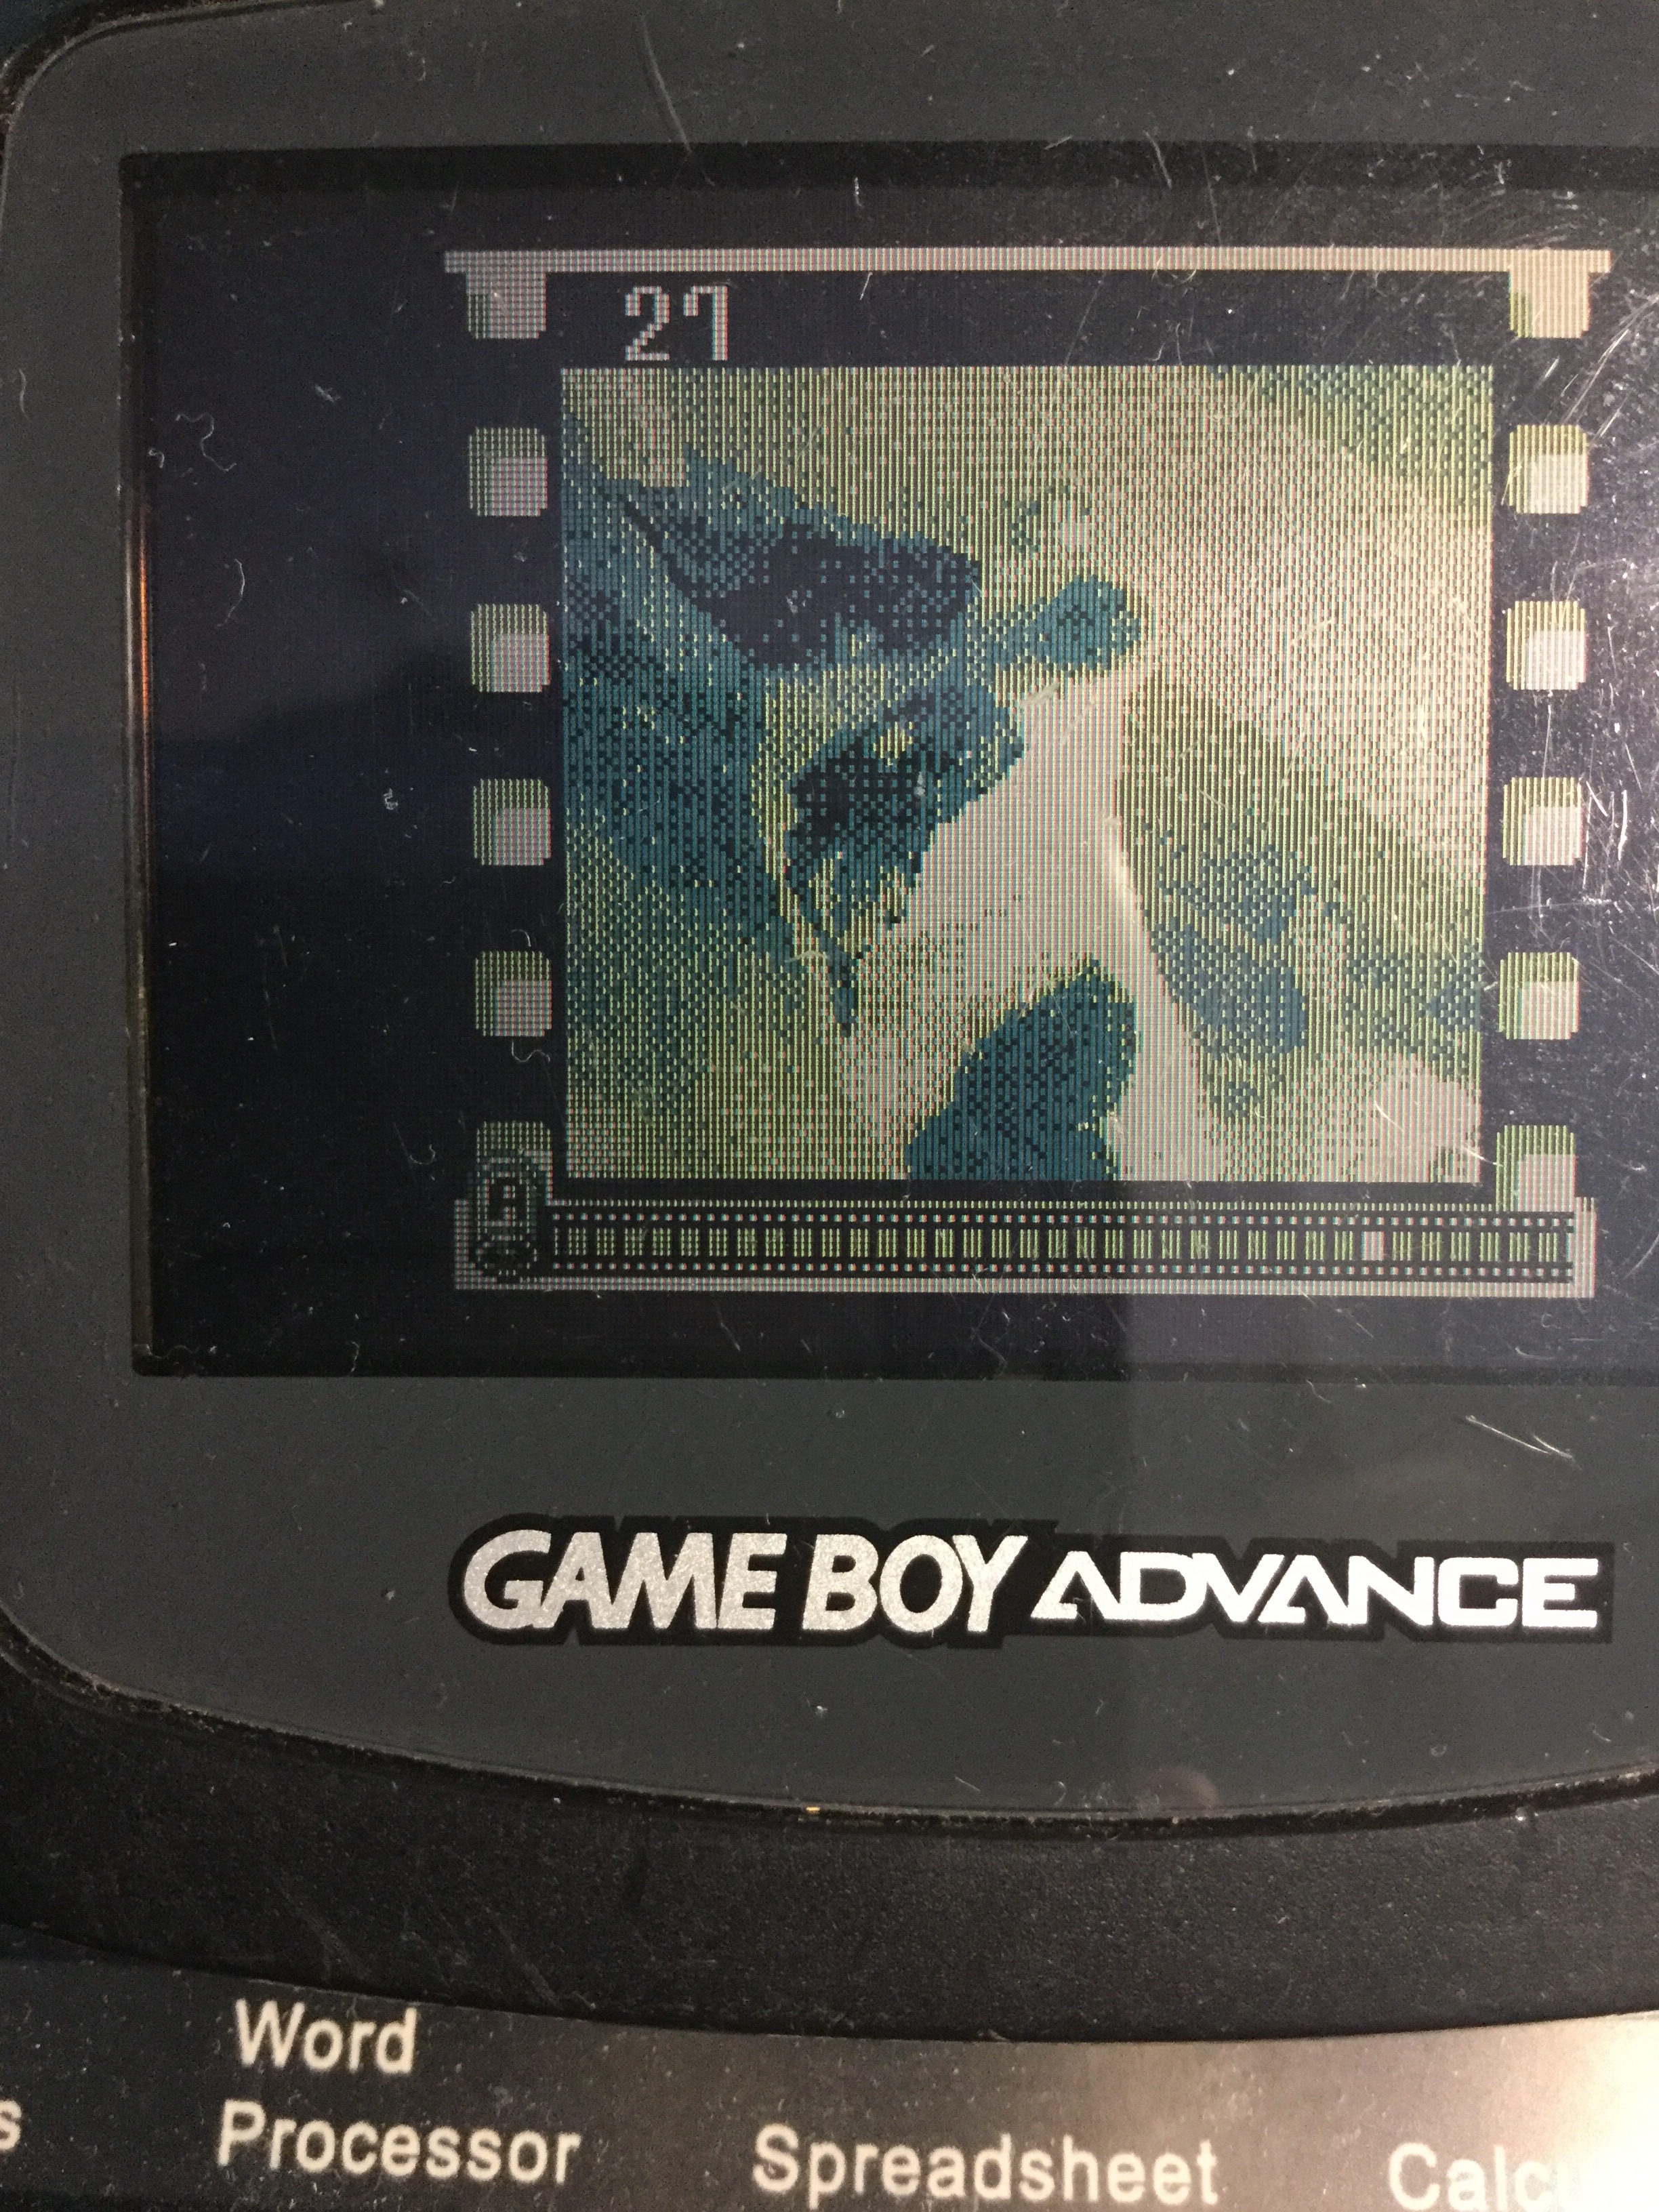 A photograph of a Game Boy Advance displaying a photograph taken by a Game Boy Camera.